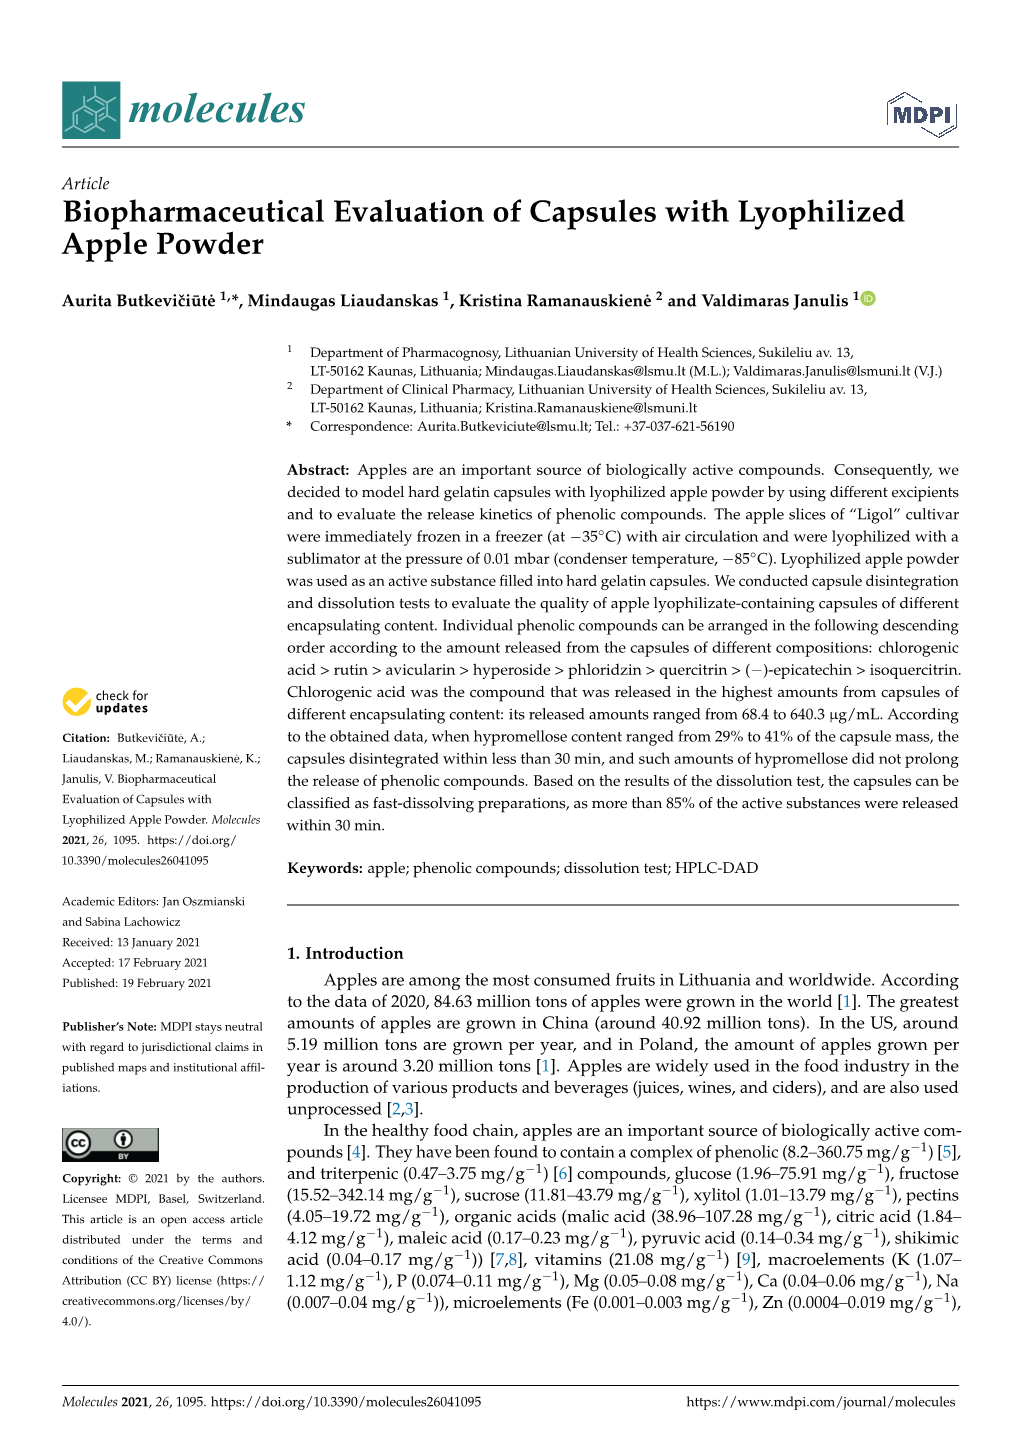 Biopharmaceutical Evaluation of Capsules with Lyophilized Apple Powder